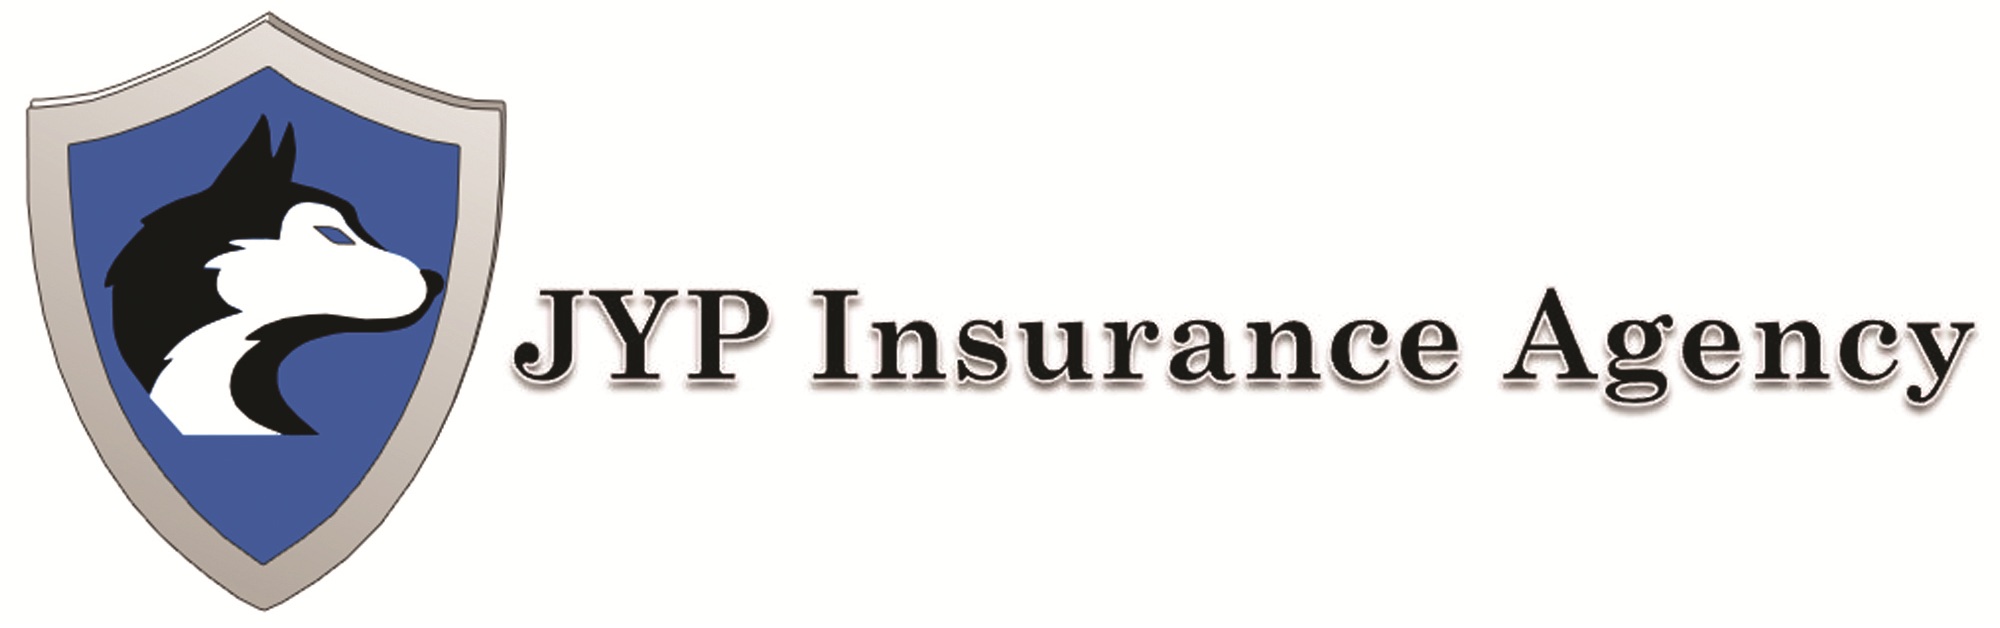 JYP Insurance Agency